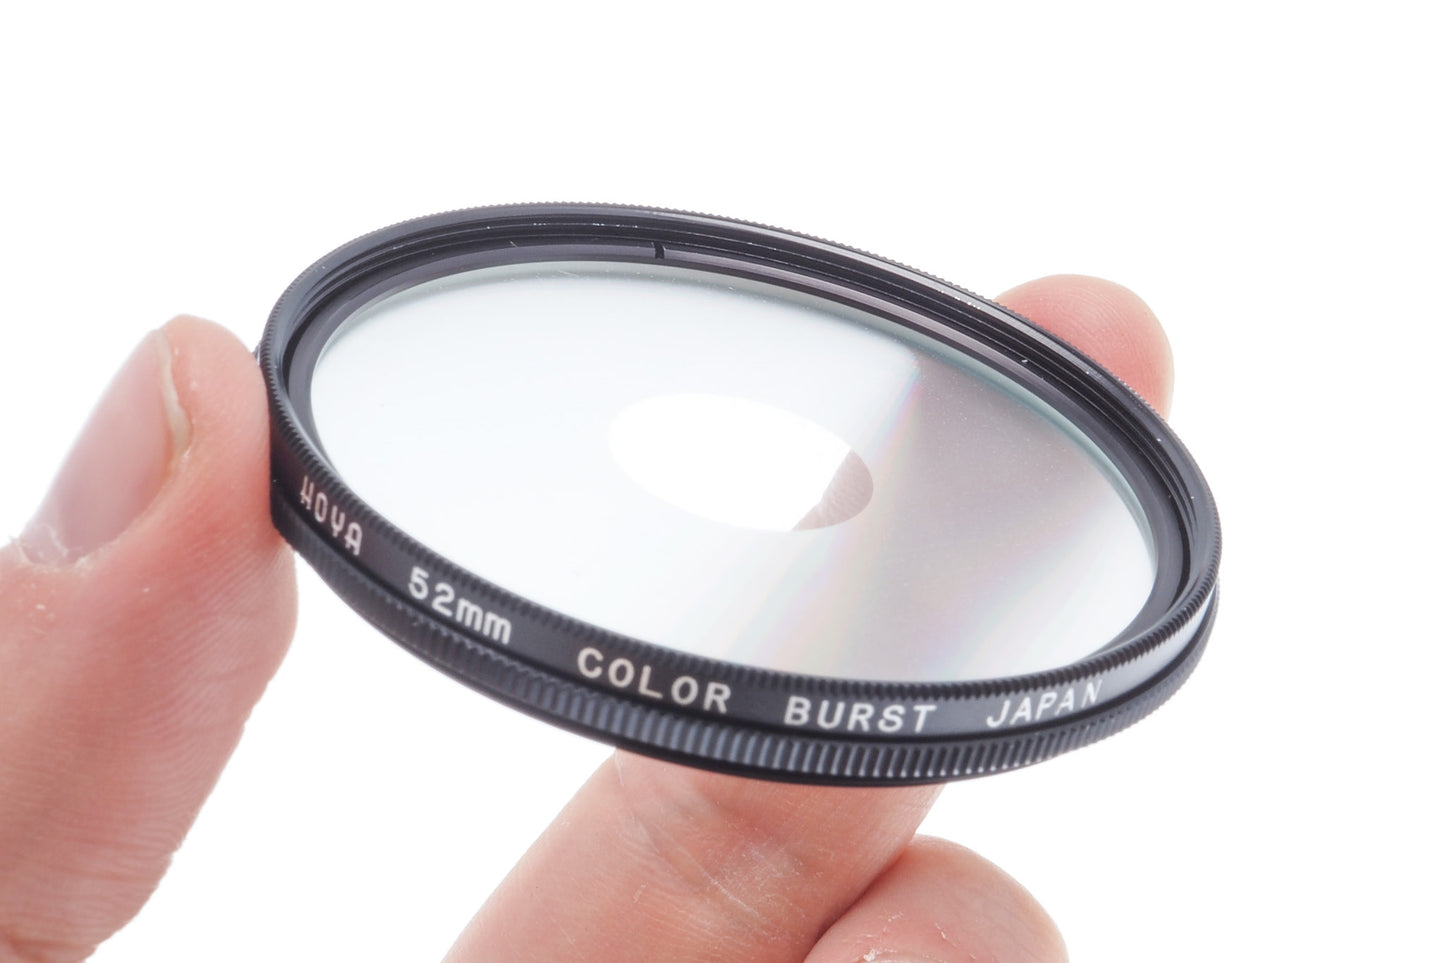 Hoya 52mm Color Burst Filter - Accessory